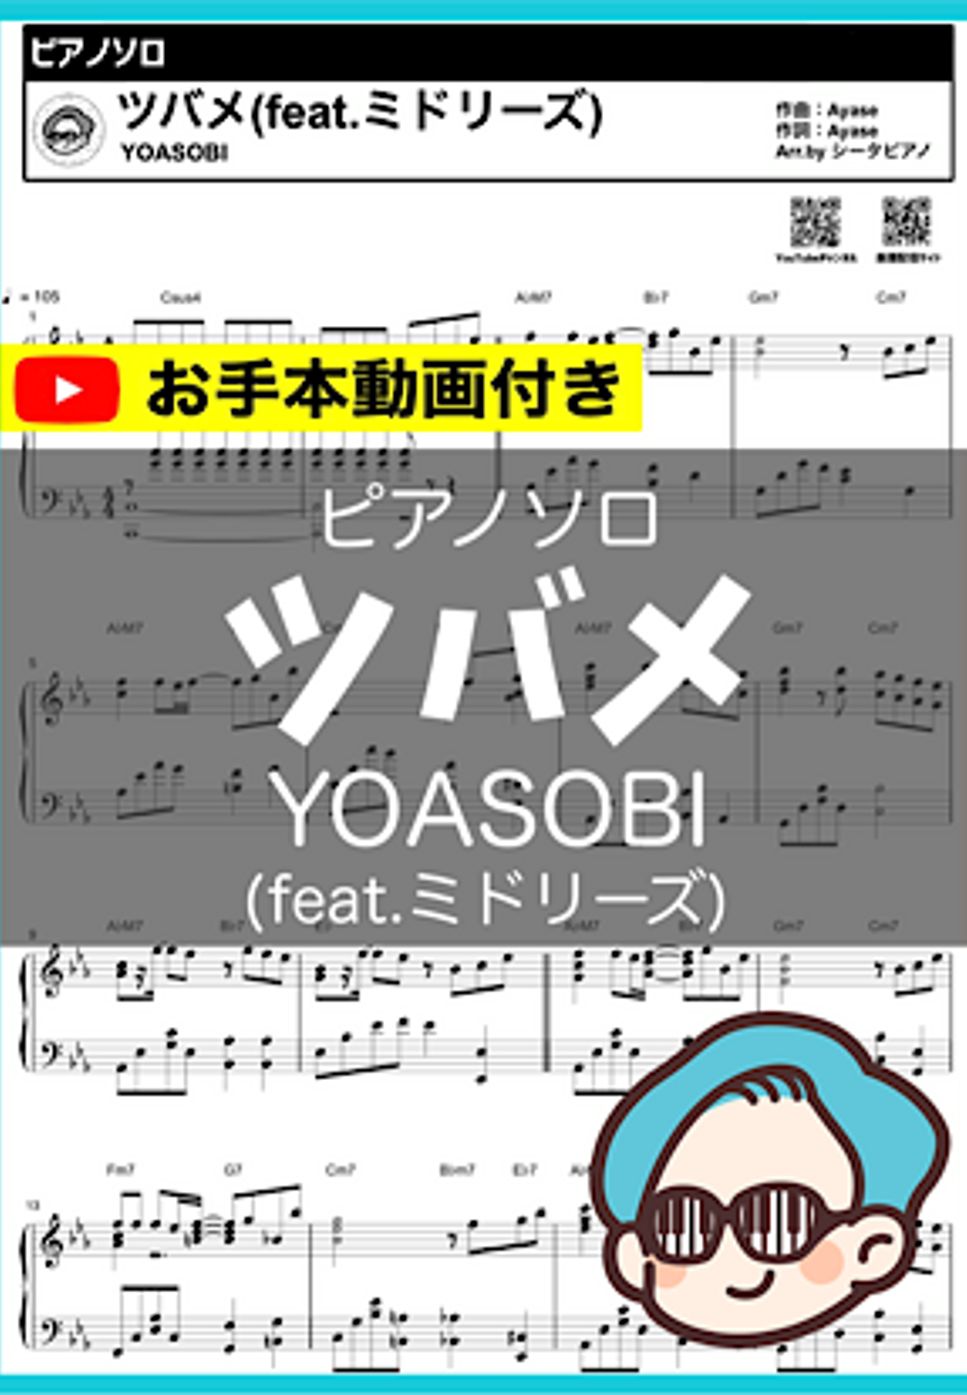 YOASOBI - ツバメ by シータピアノ